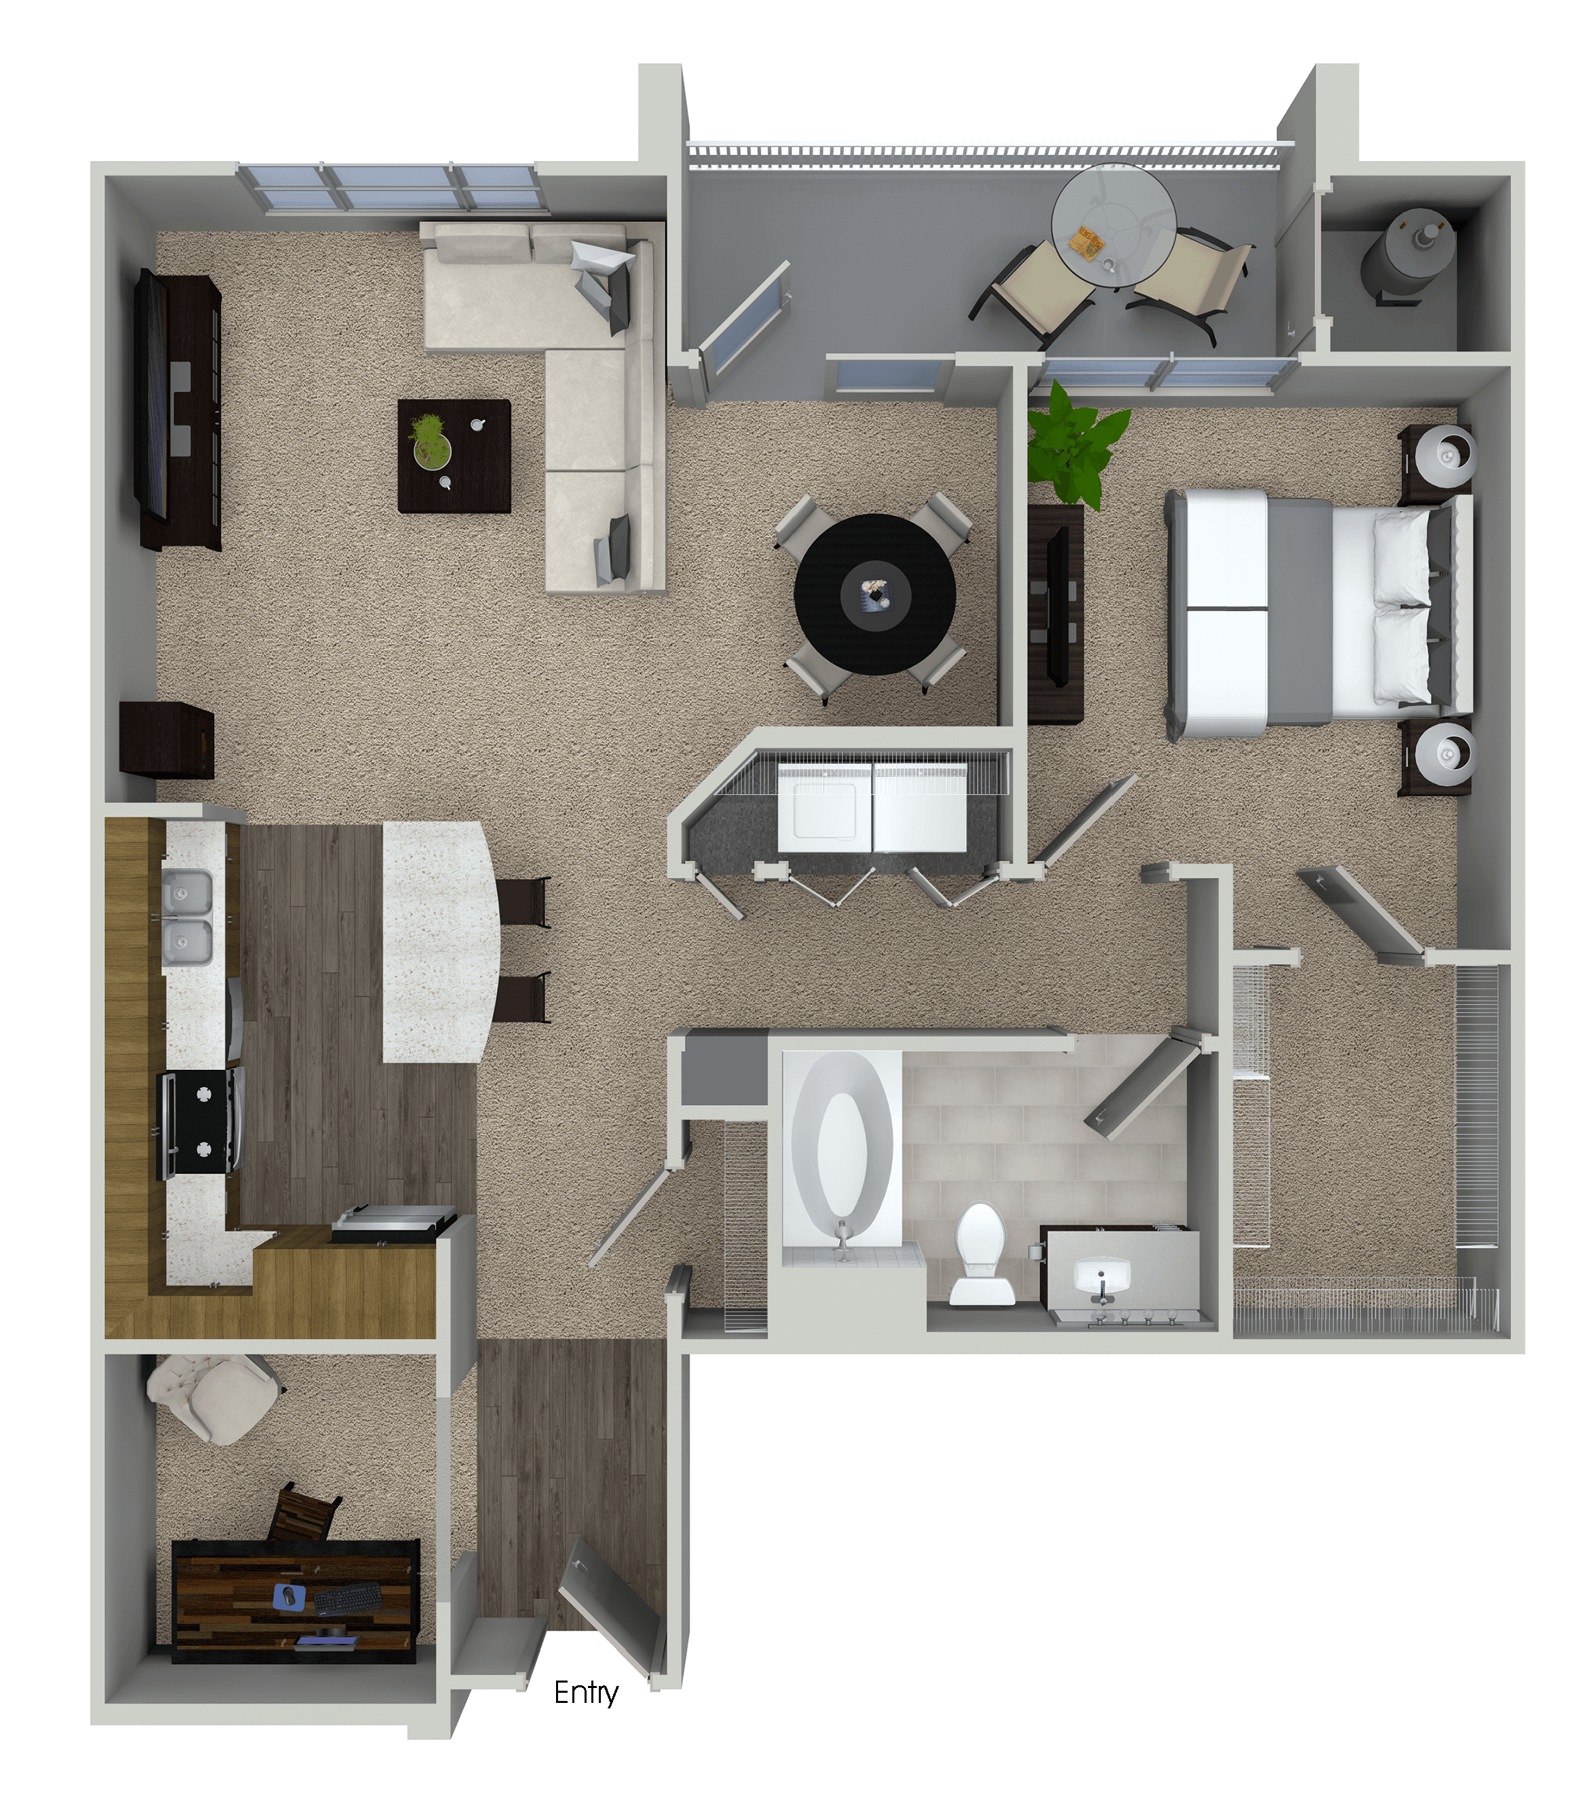 Floorplan for Apartment #2207, 1 bedroom unit at Halstead Marlborough